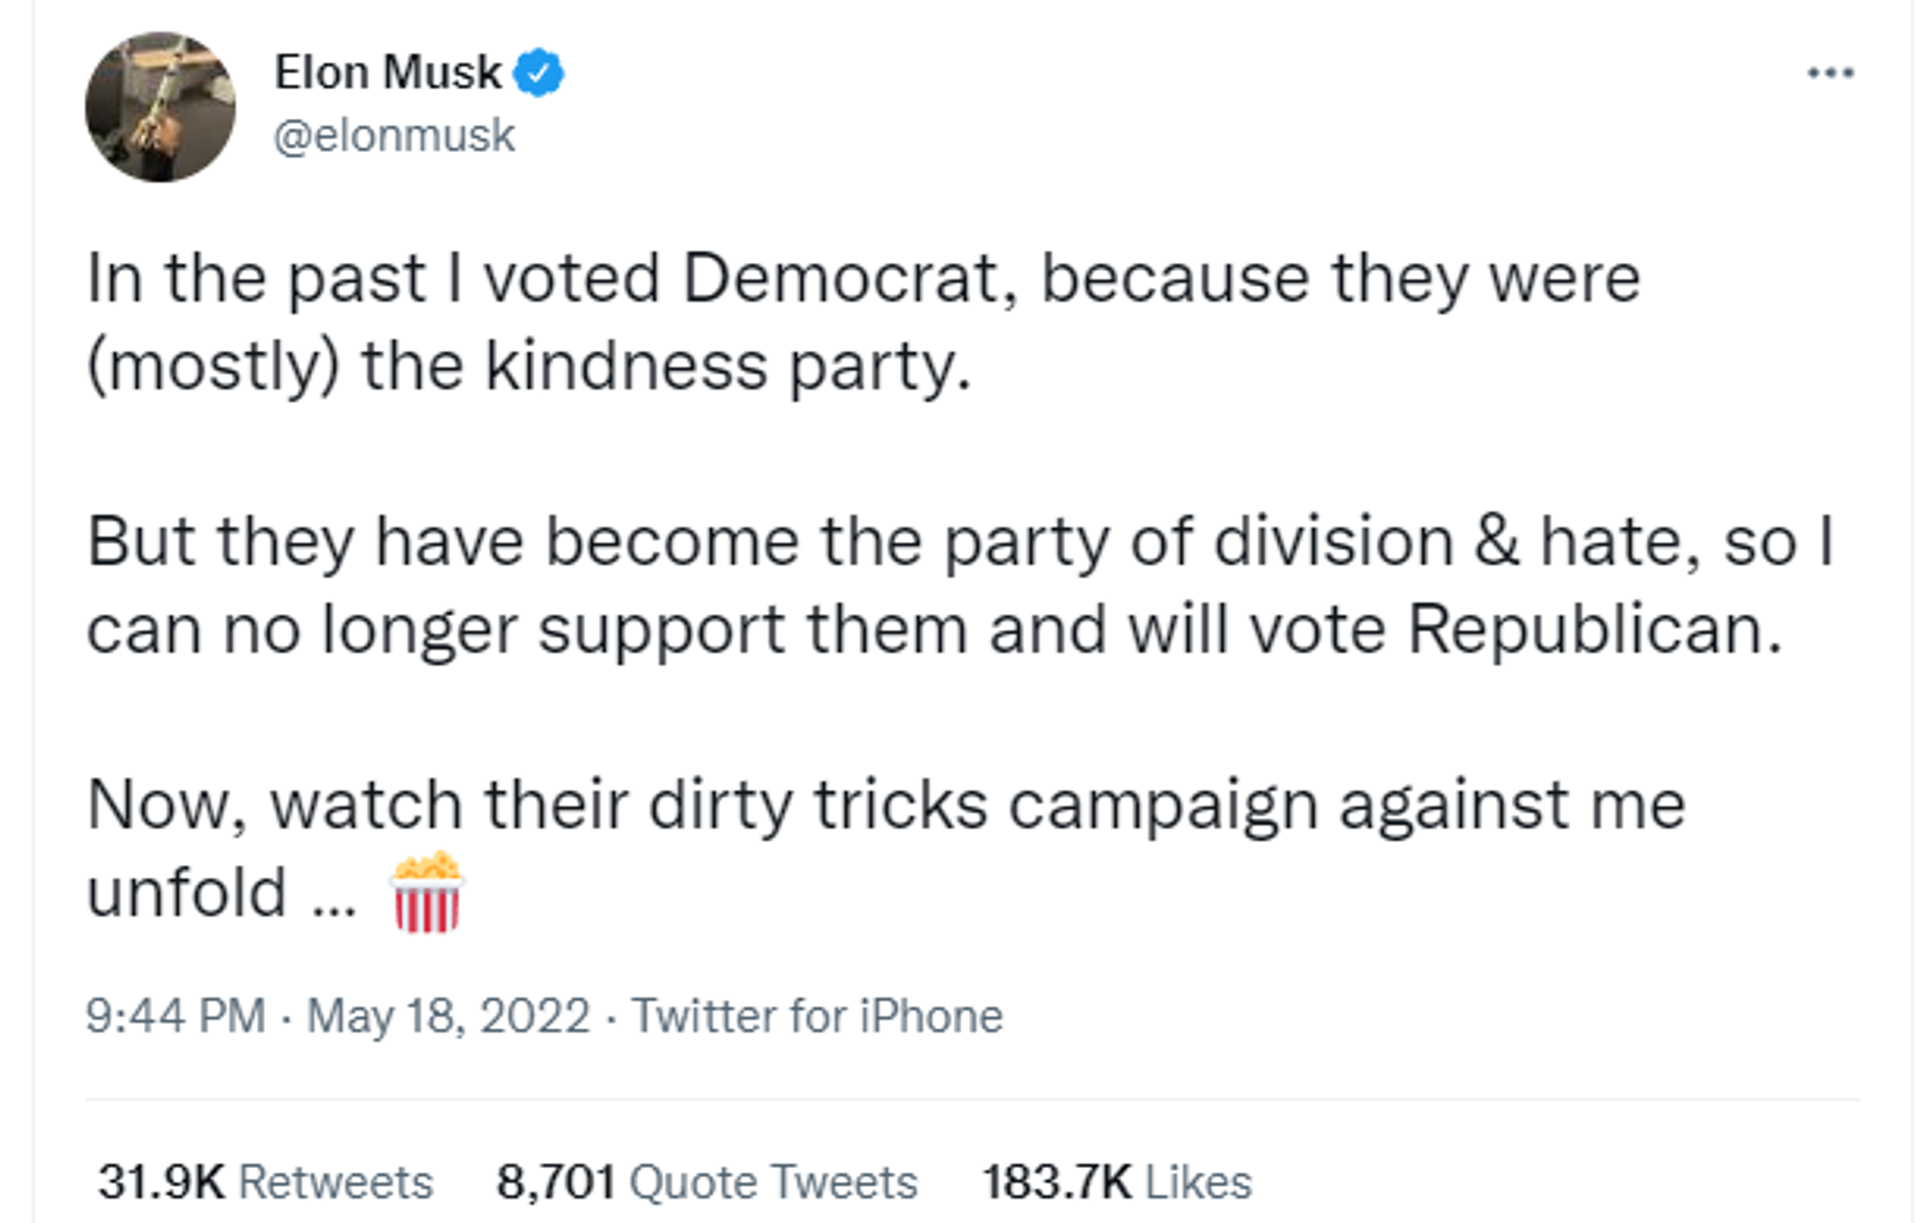 Elon Musk on Twitter - Sputnik International, 1920, 18.05.2022